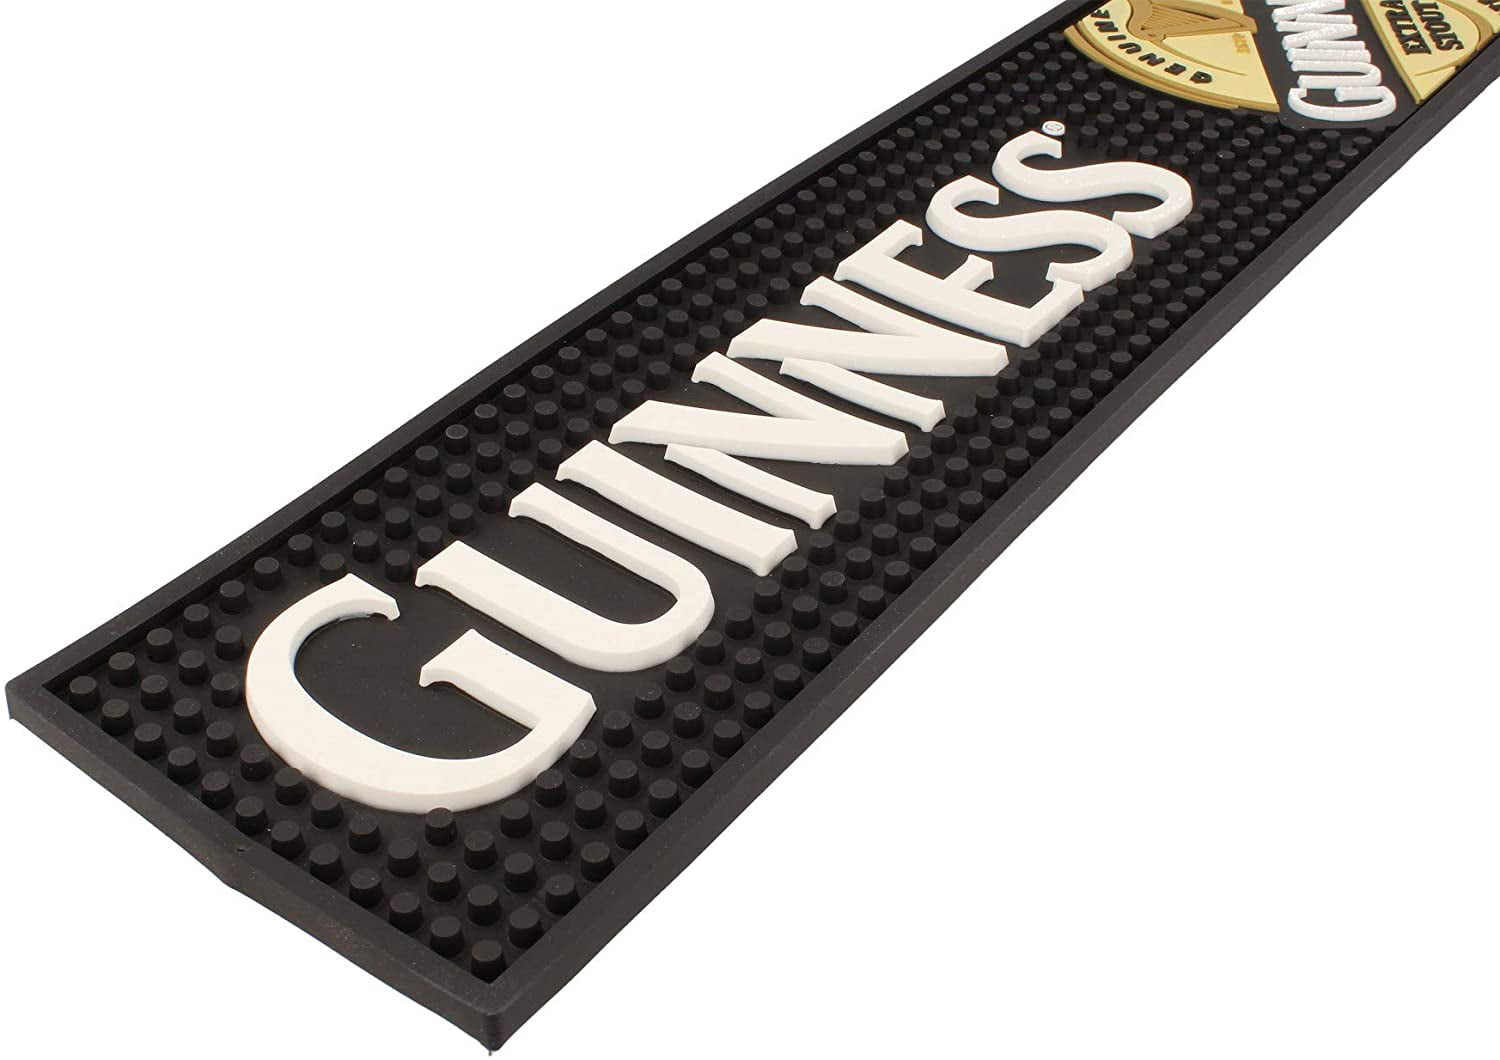 Guinness Pvc Bar Mat Label